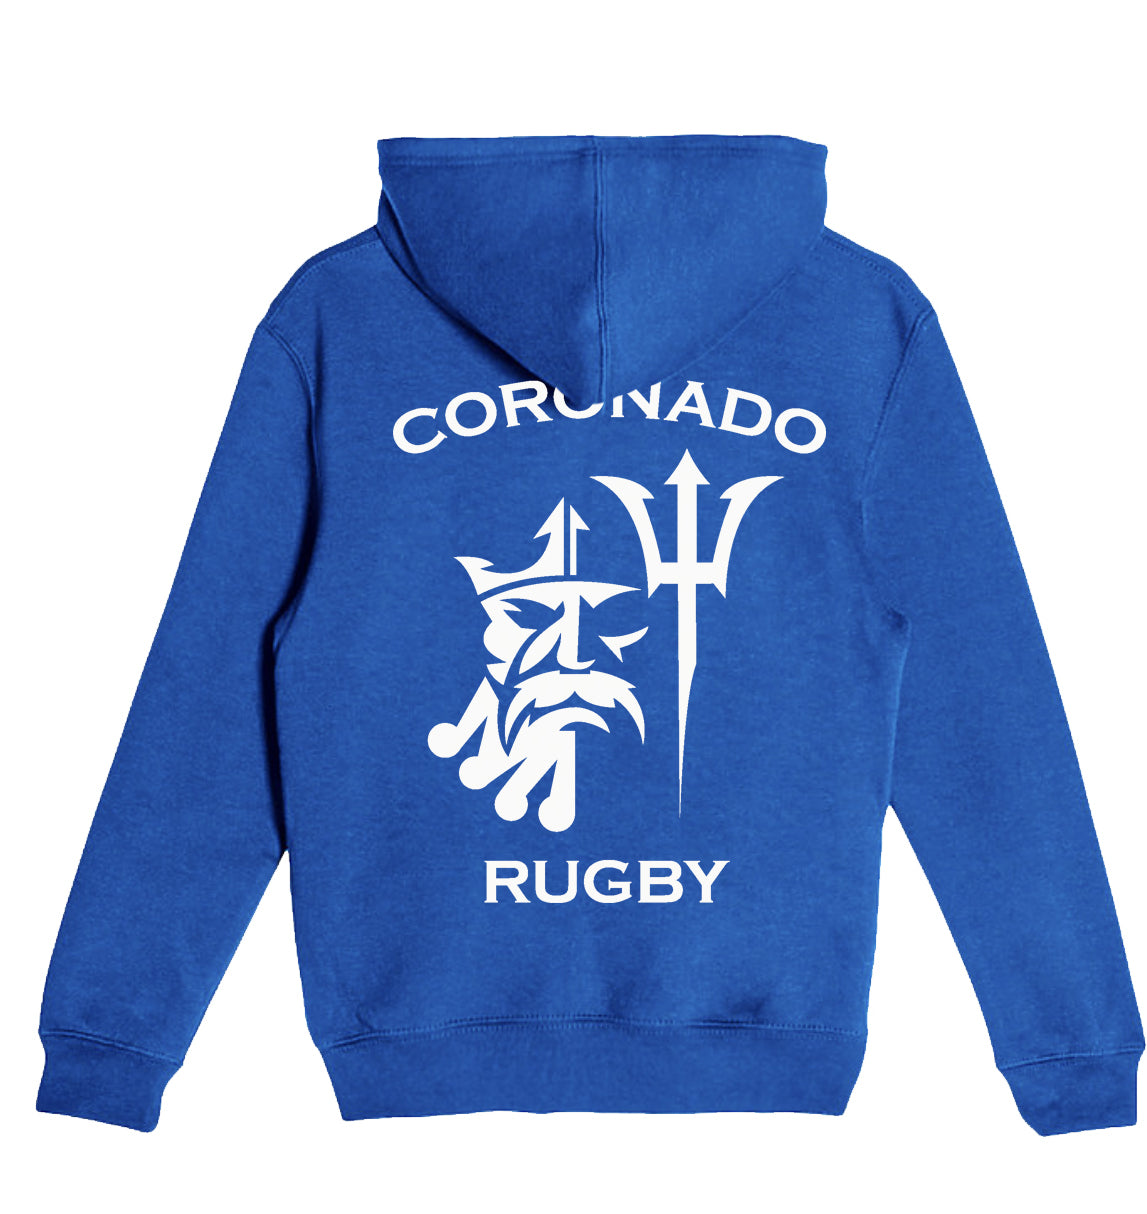 Coronado Rugby Youth Hoodie